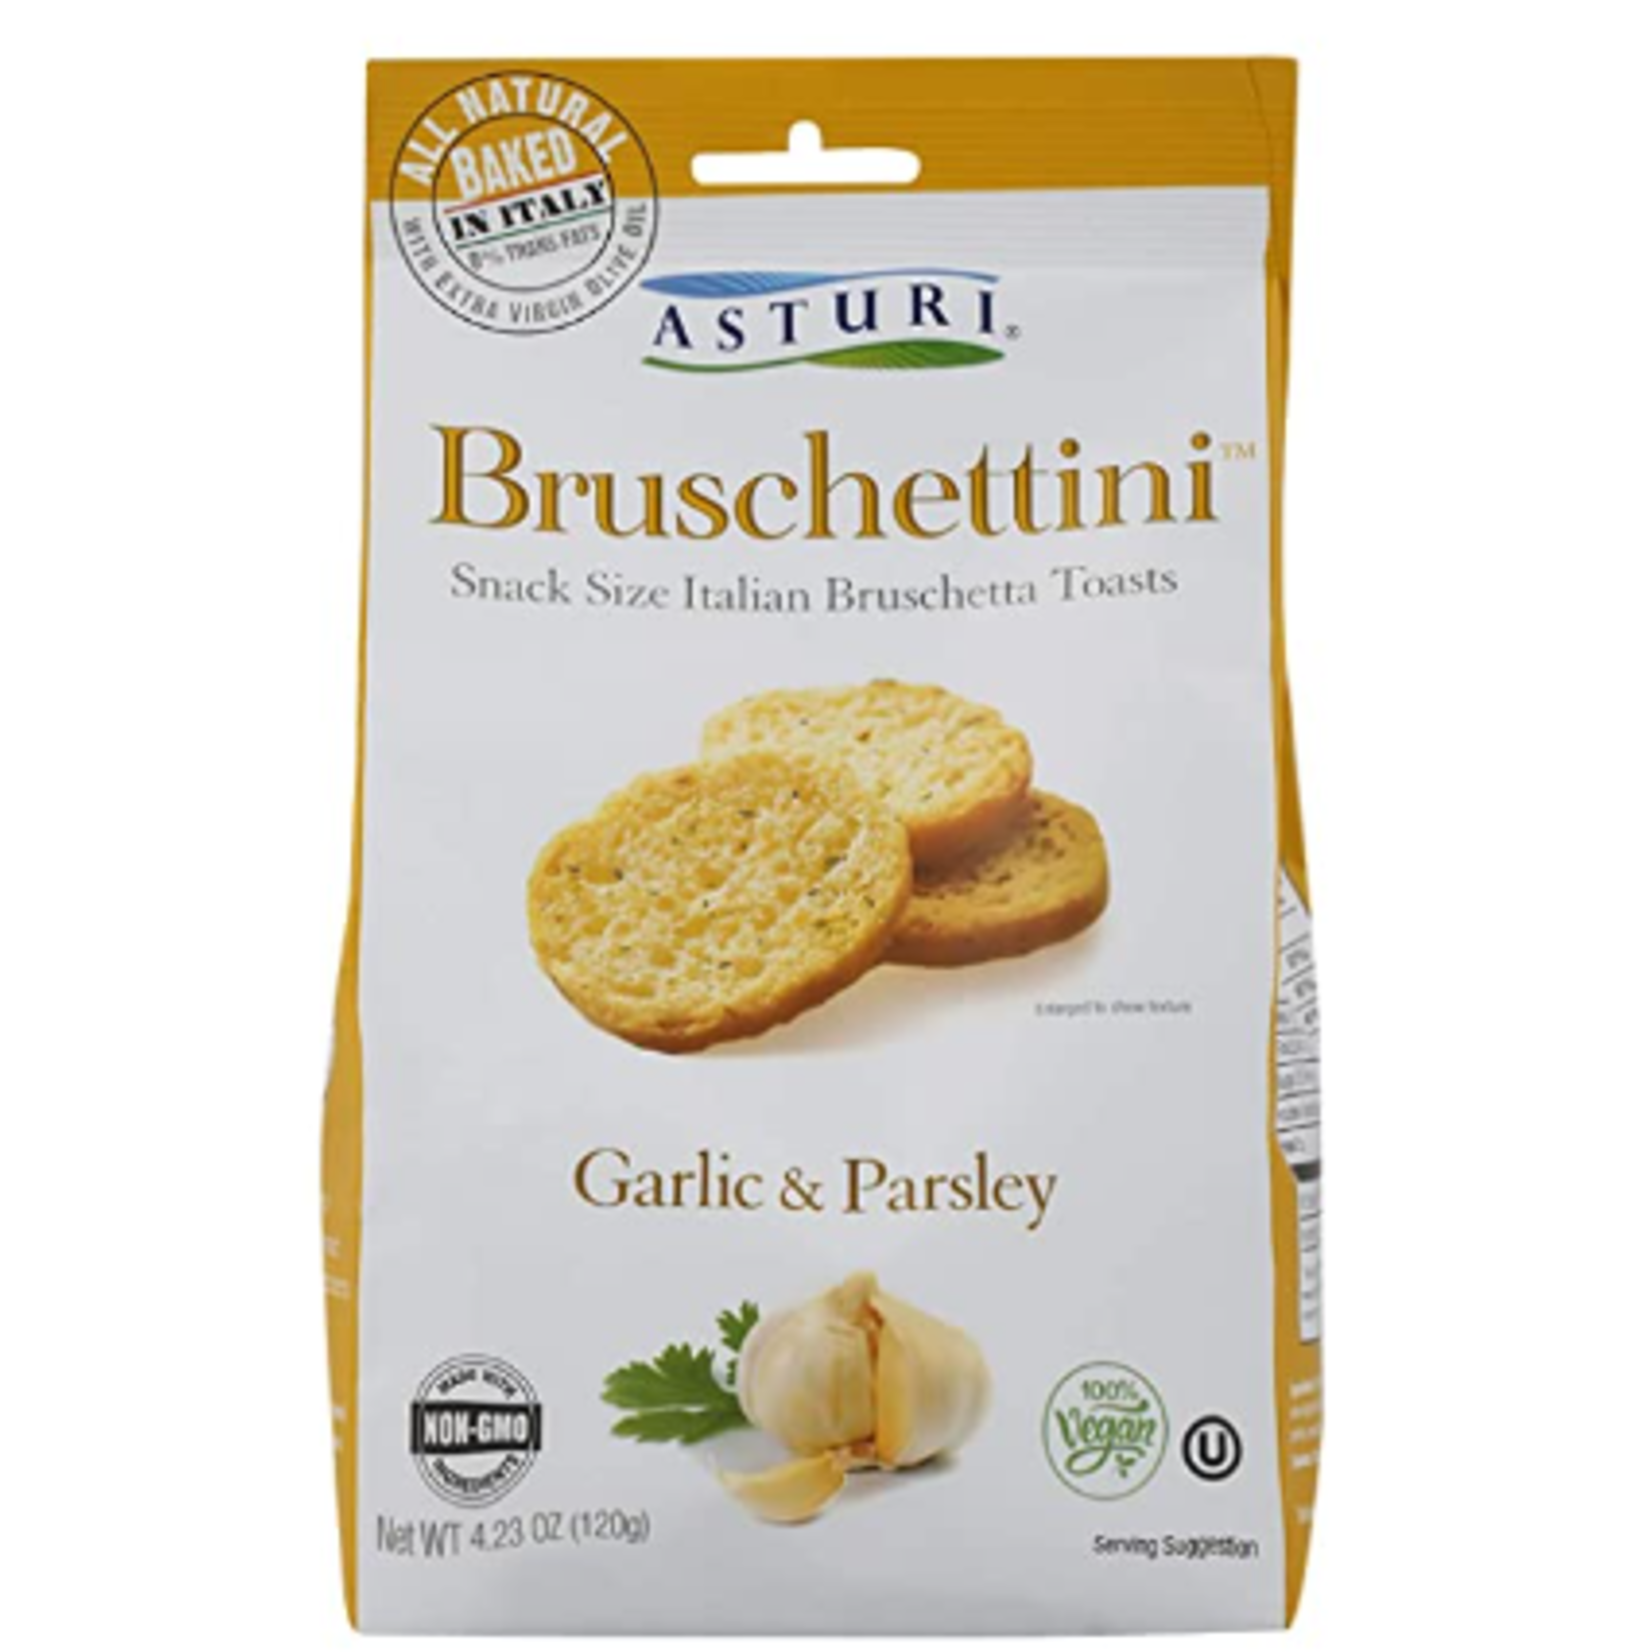 Asturi Bruschettini Garlic & Parsley 4oz